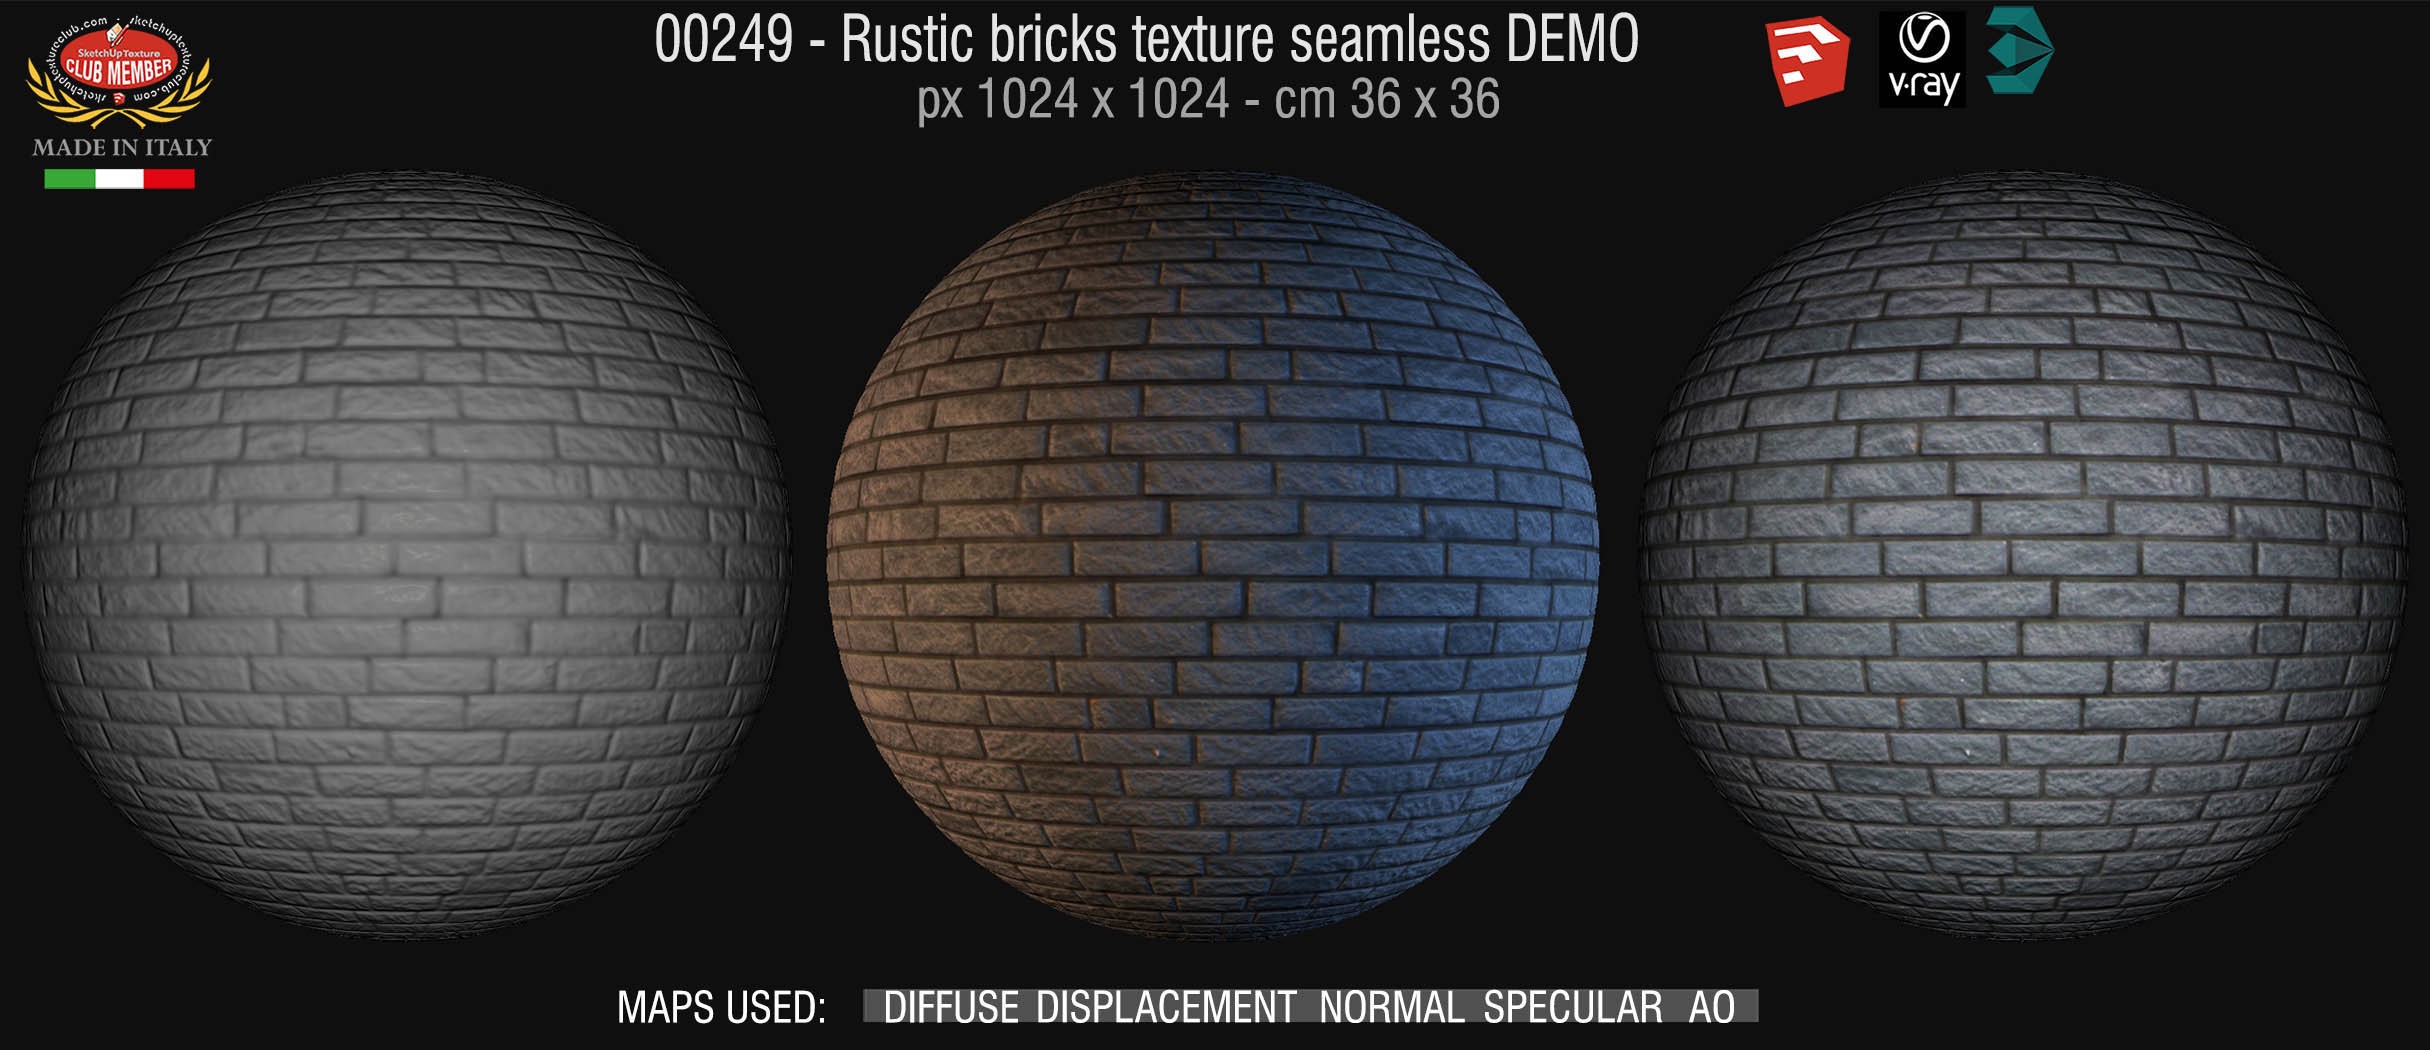 00249 Rustic bricks texture seamless + maps DEMO